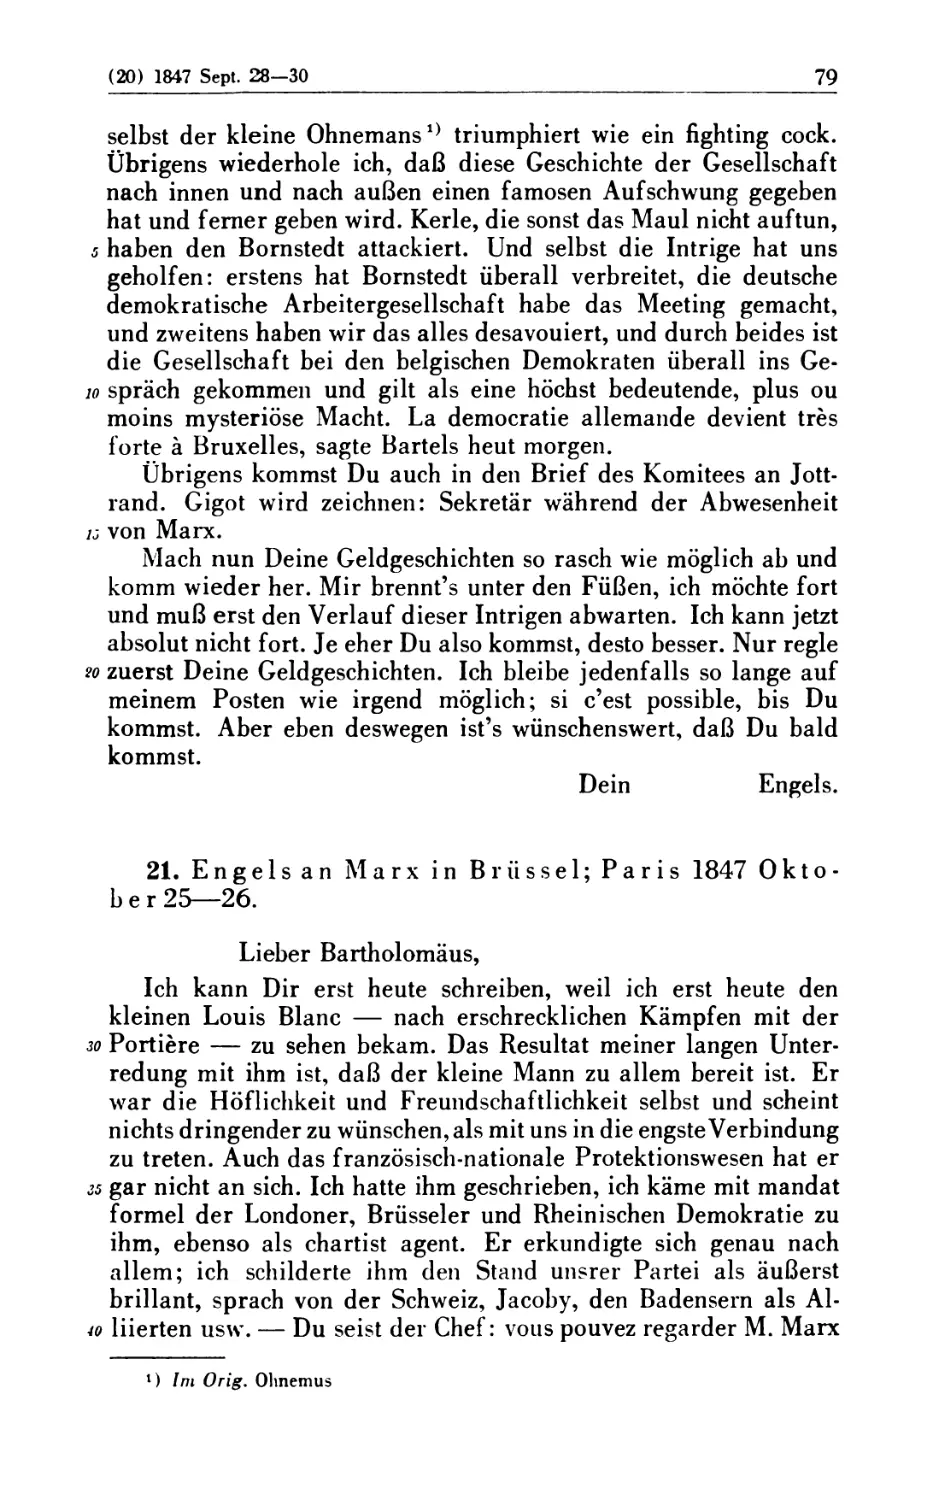 21. Engels an Marx in Brüssel; Paris 1847 Oktober 25—26